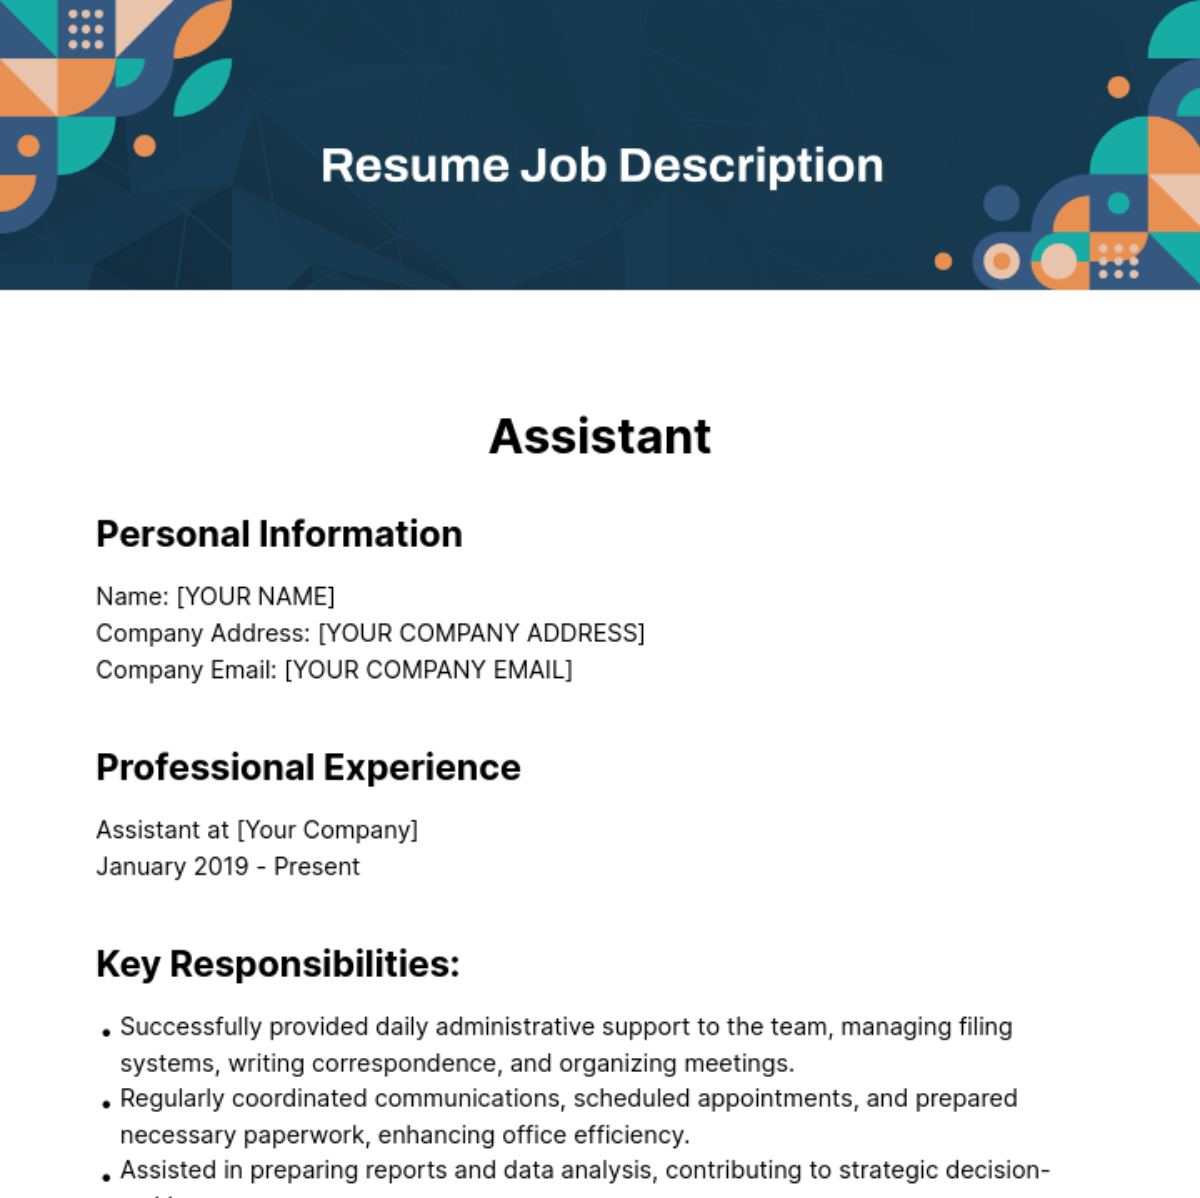 Resume Job Description Template